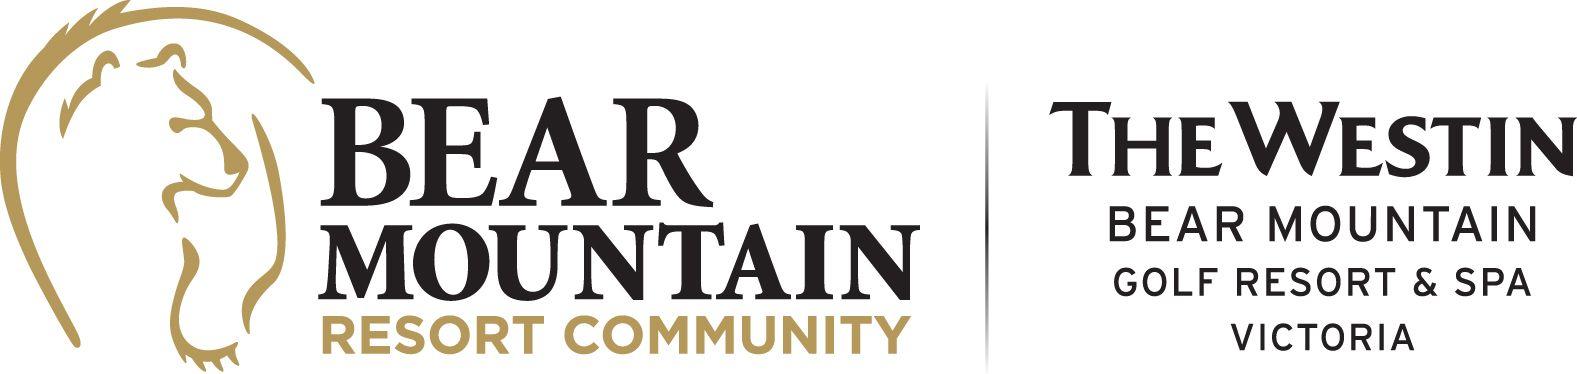 Bear Mountain Logo - Bear Mountain Resort Community